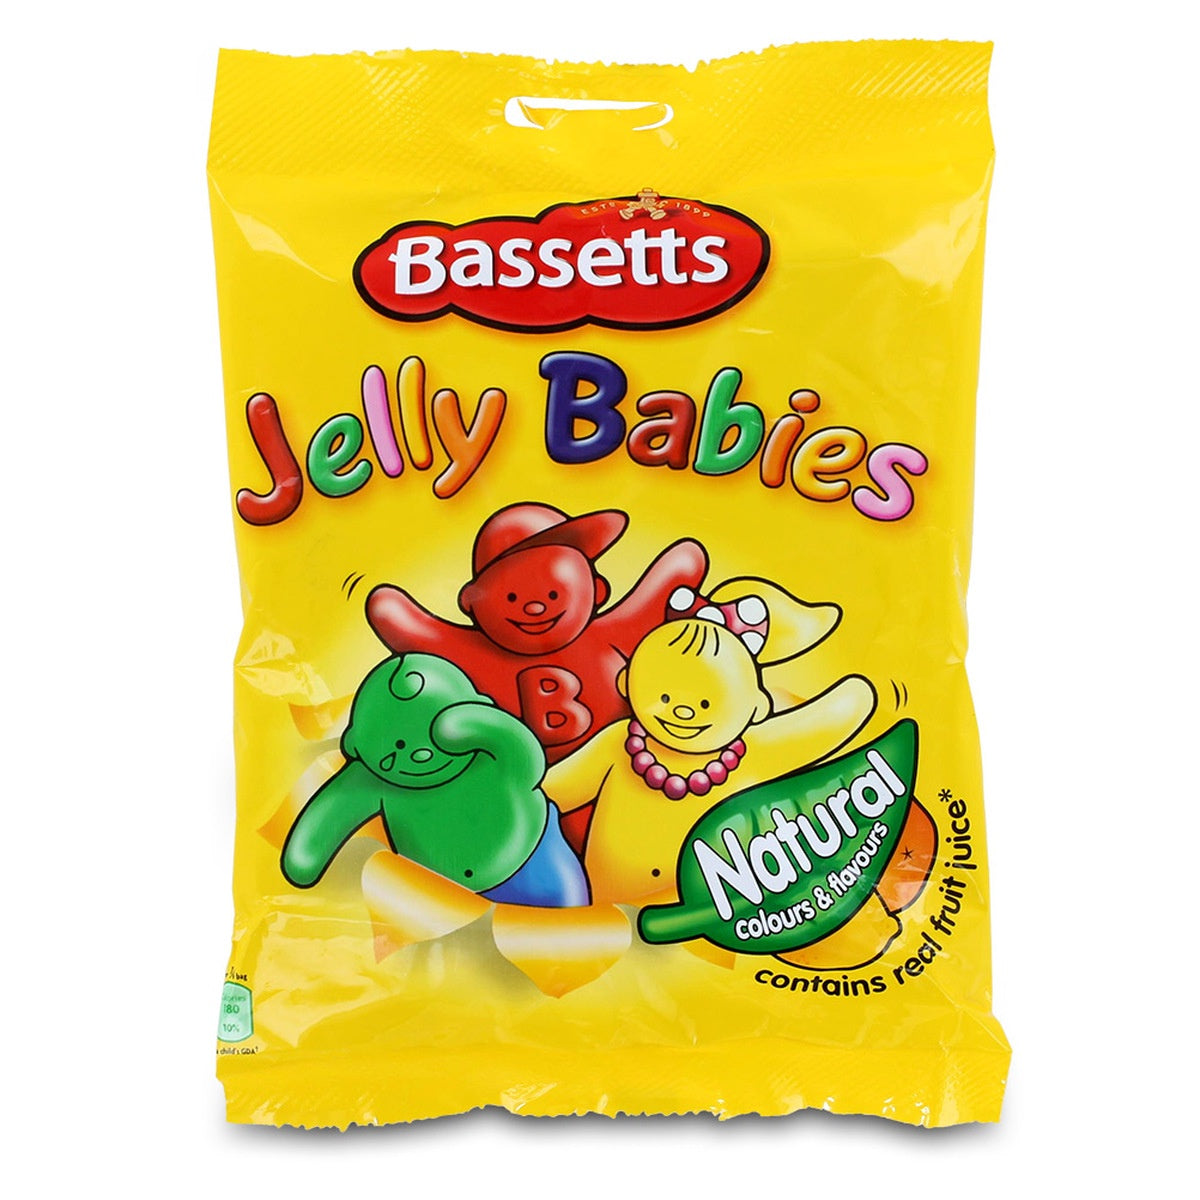 Bassett's Jelly Babies 6.7oz